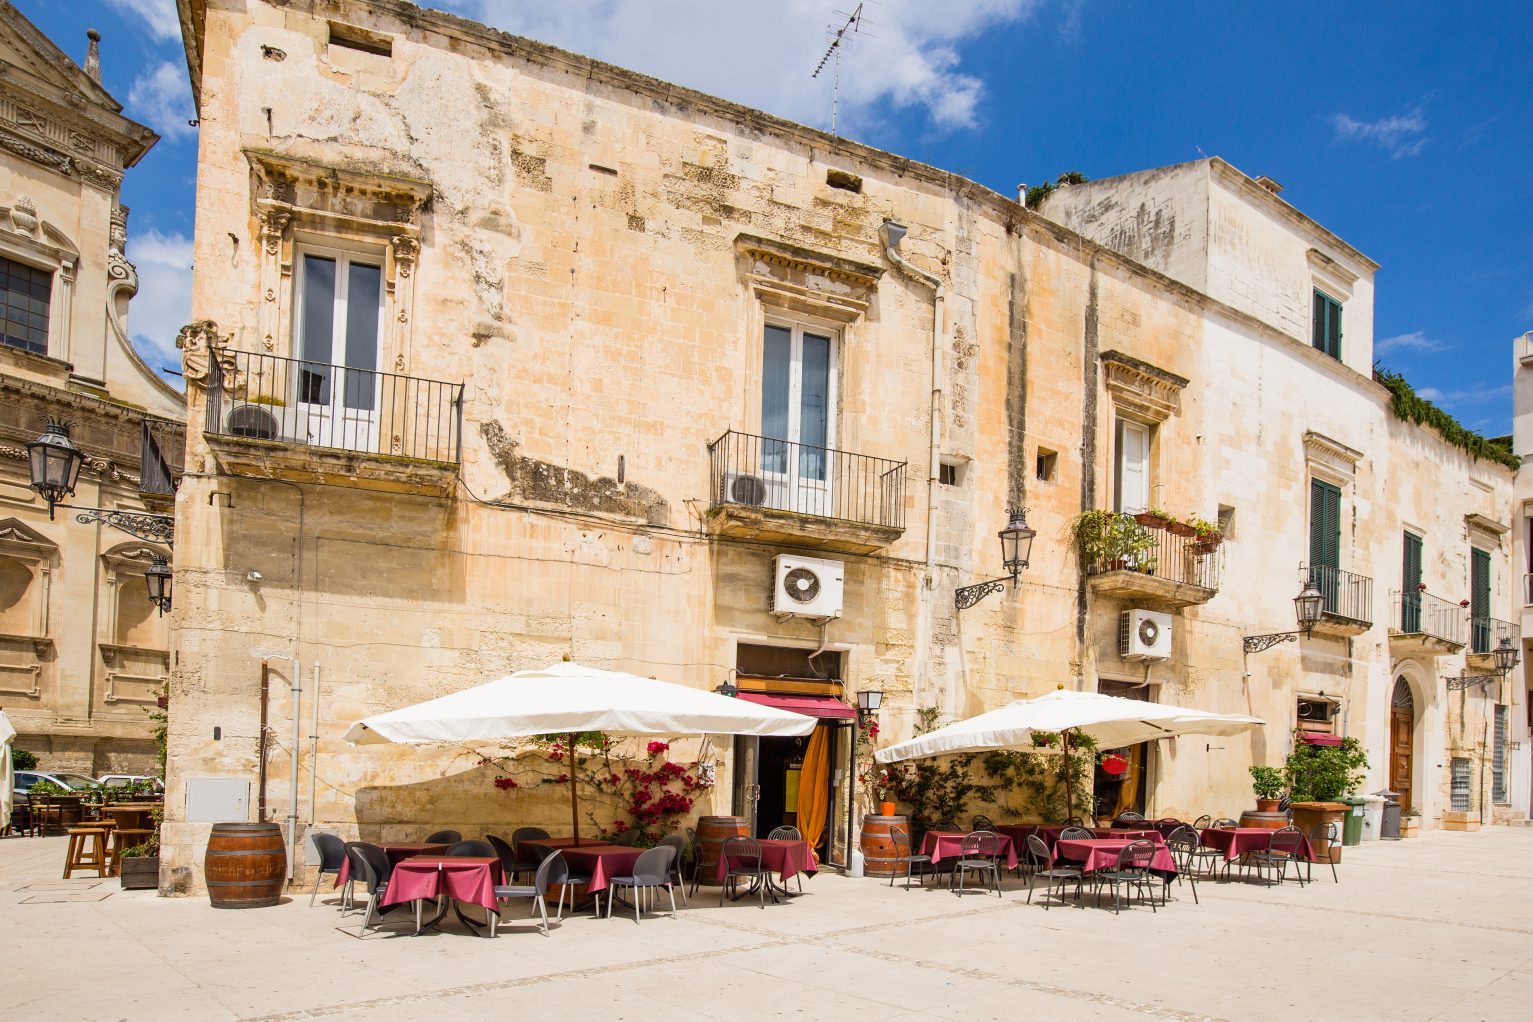 The historical city centre of Lecce.